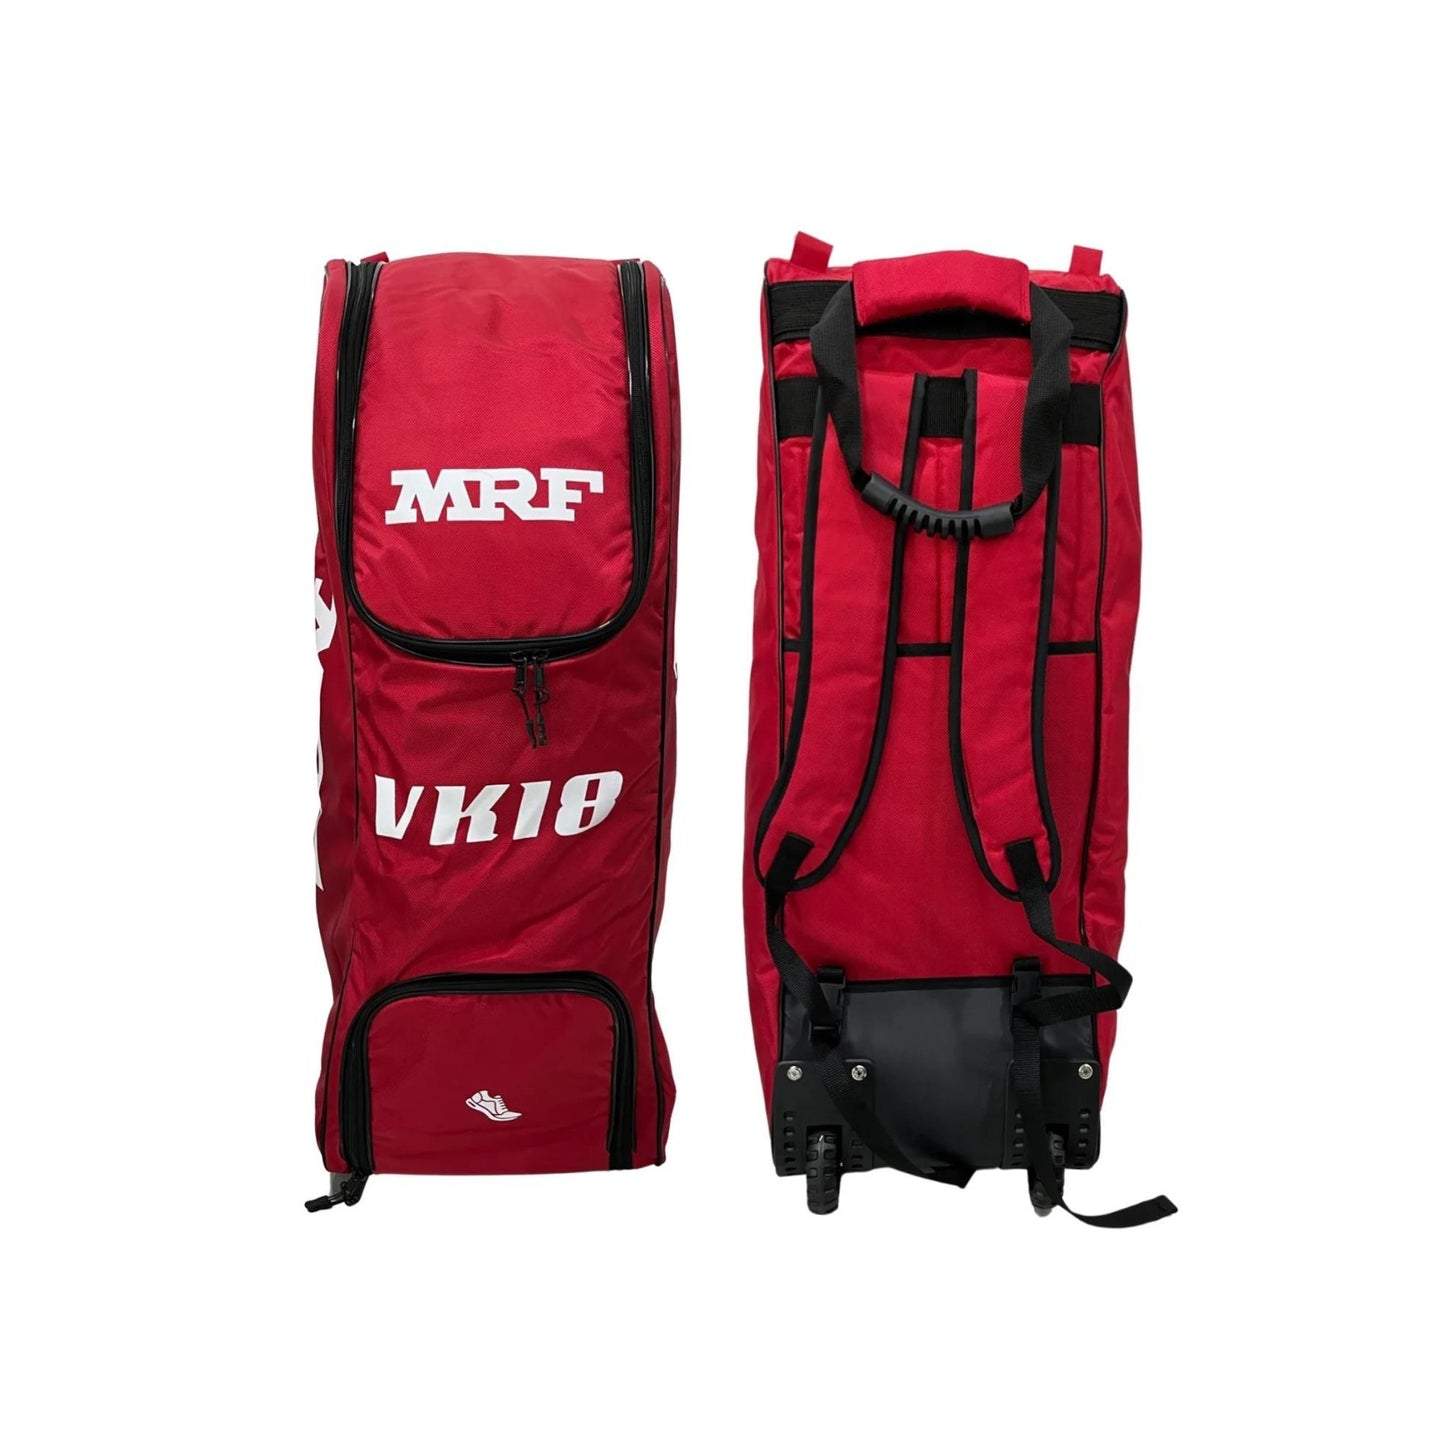 MRF VK 18 Junior Cricket Kit Bag with wheels